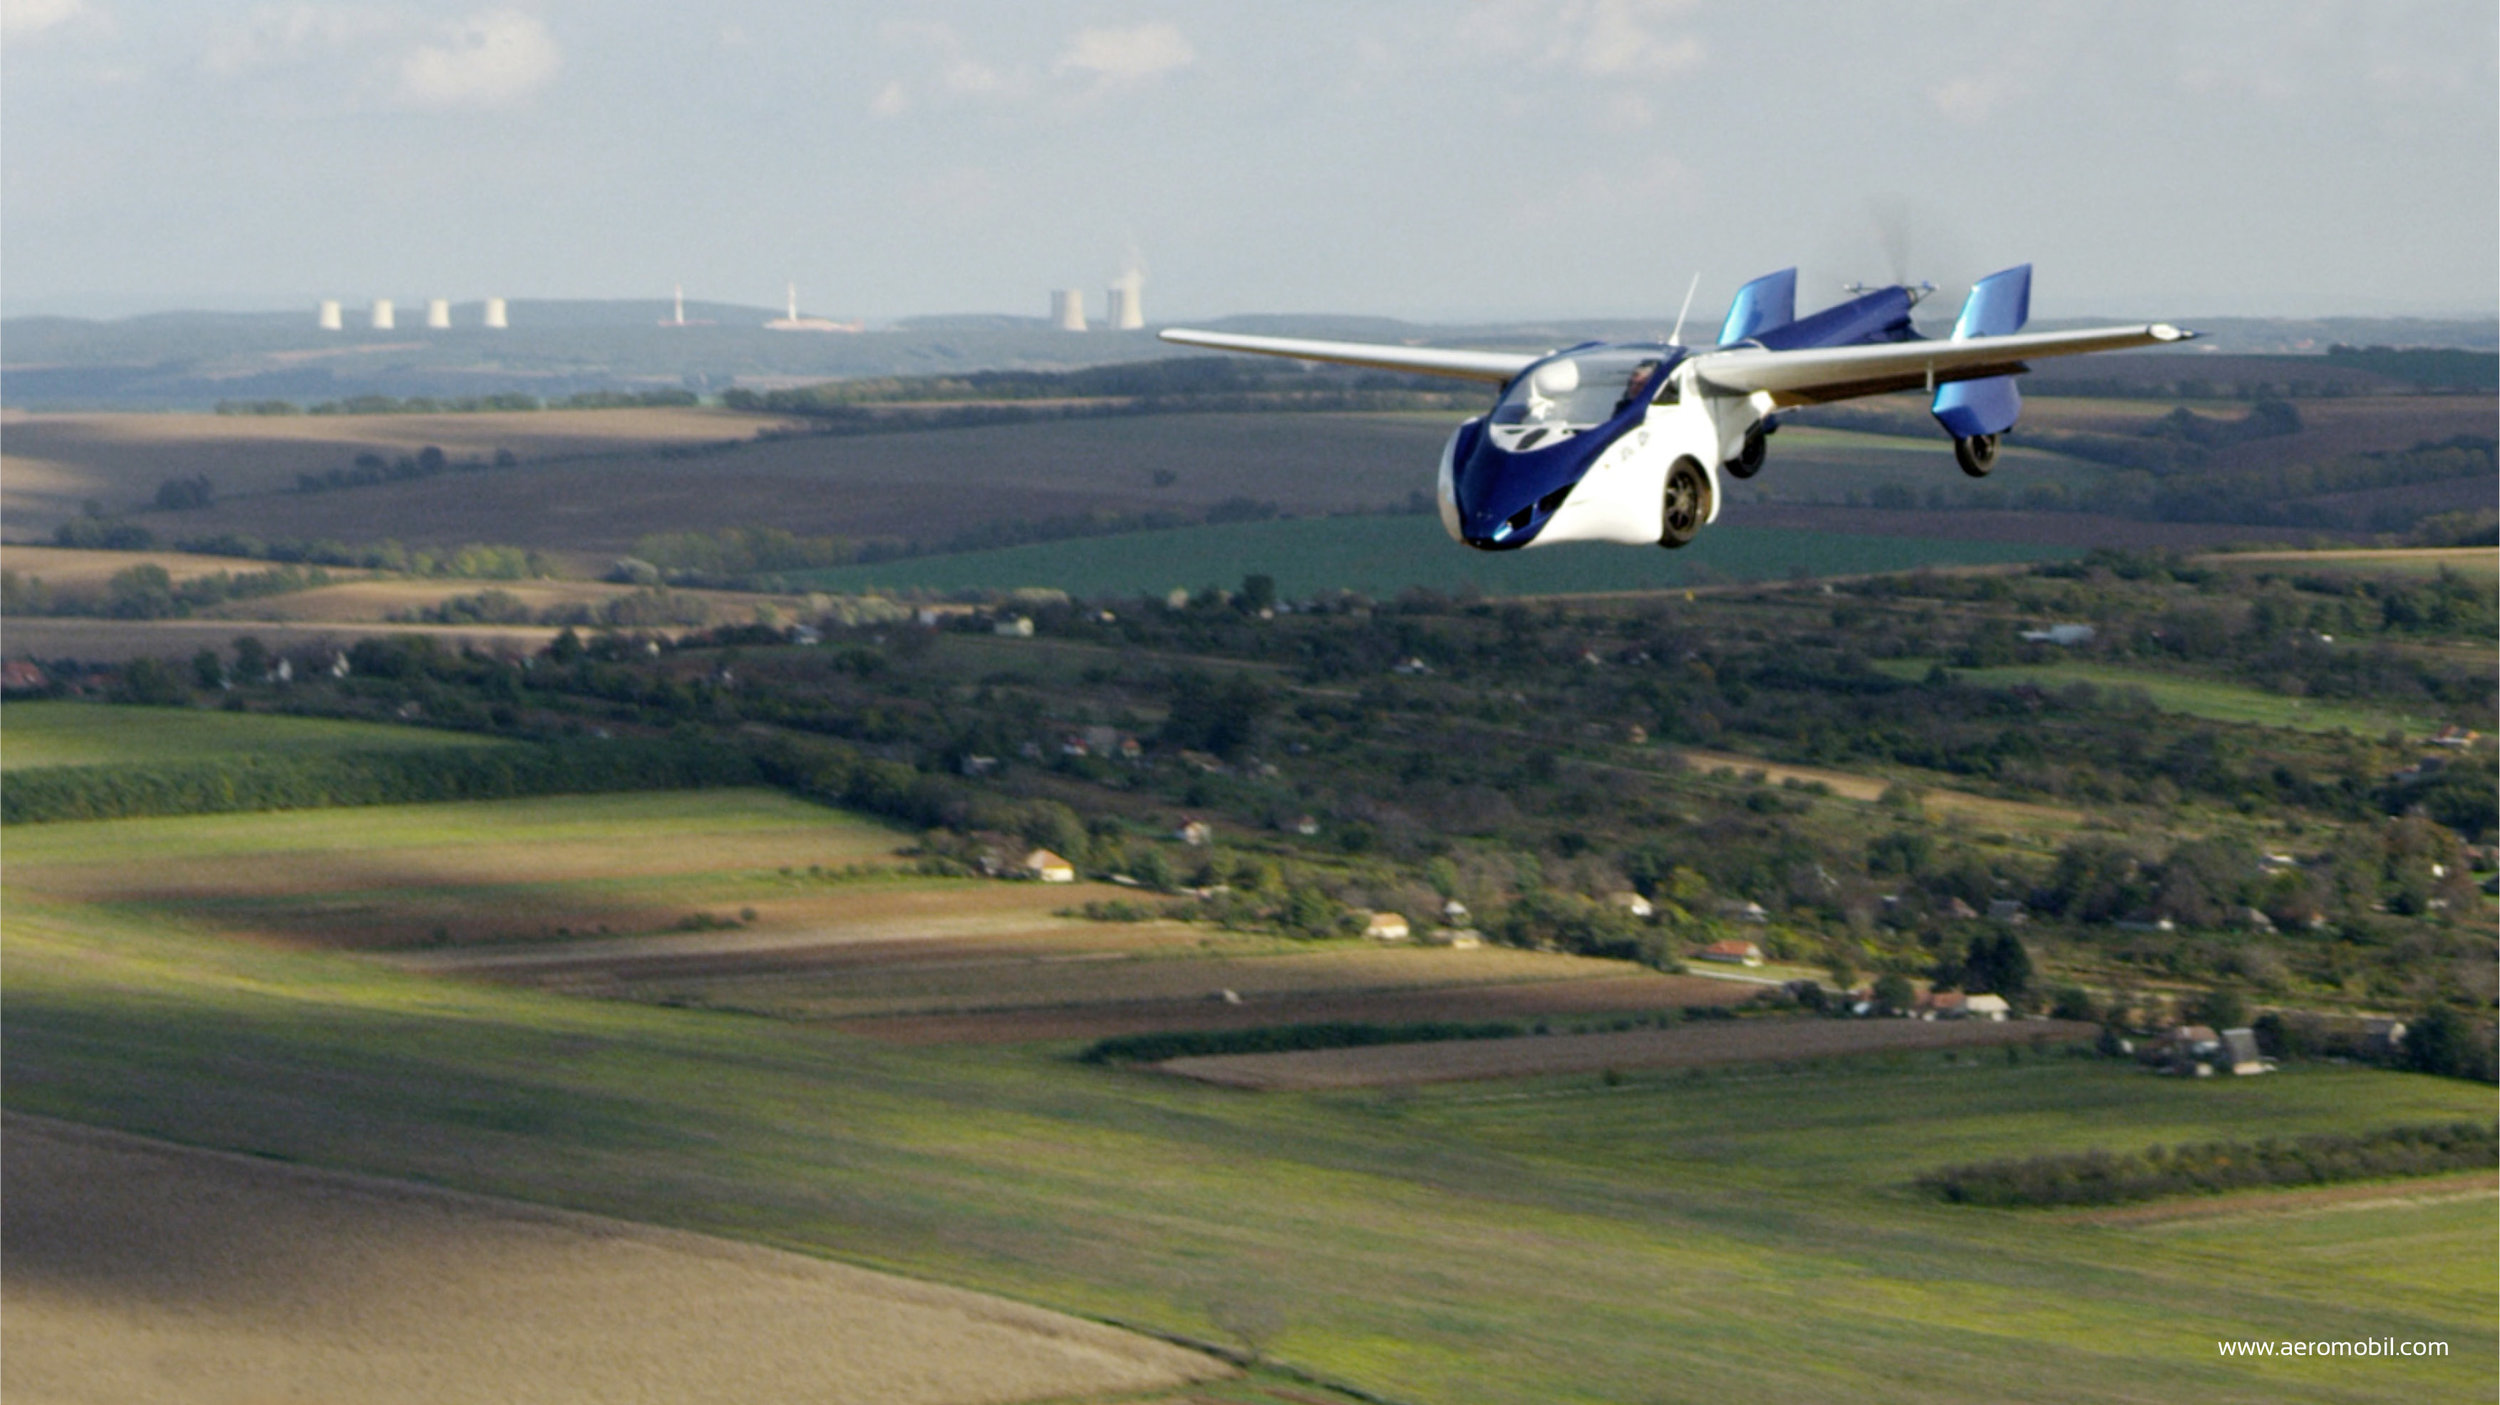 AeroMobil 3 first flight over the horizon countryside.jpg